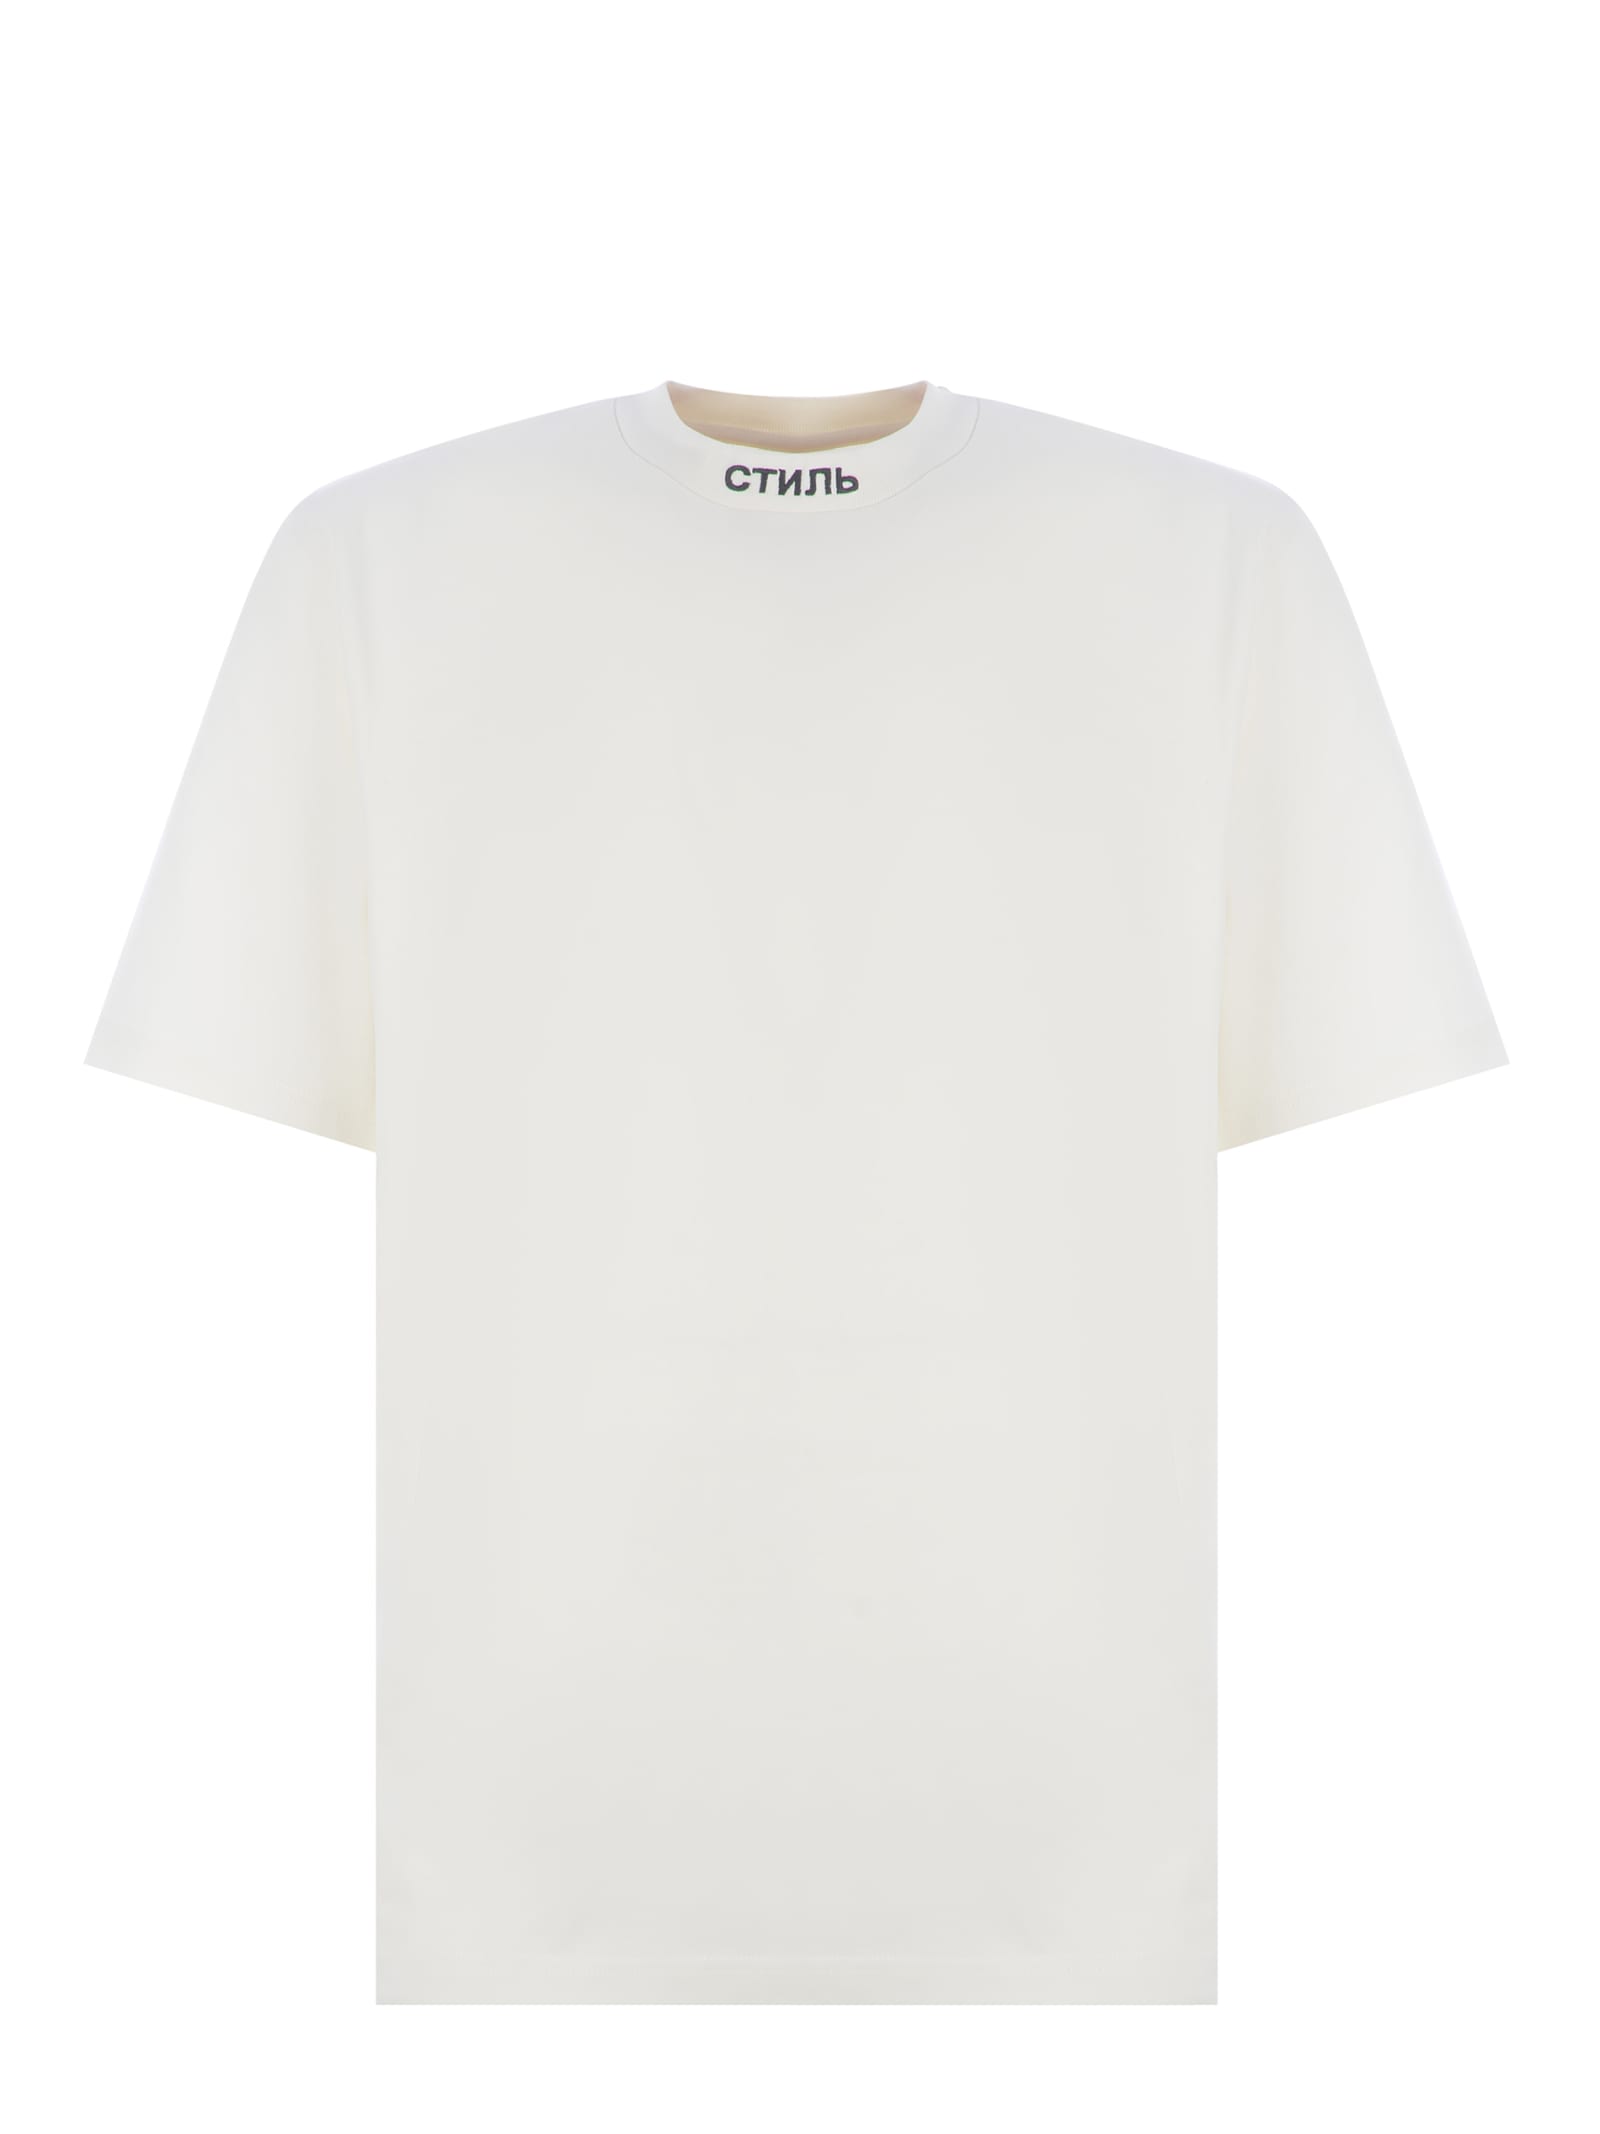 T-shirt Heron Preston ctnmb In Cotton